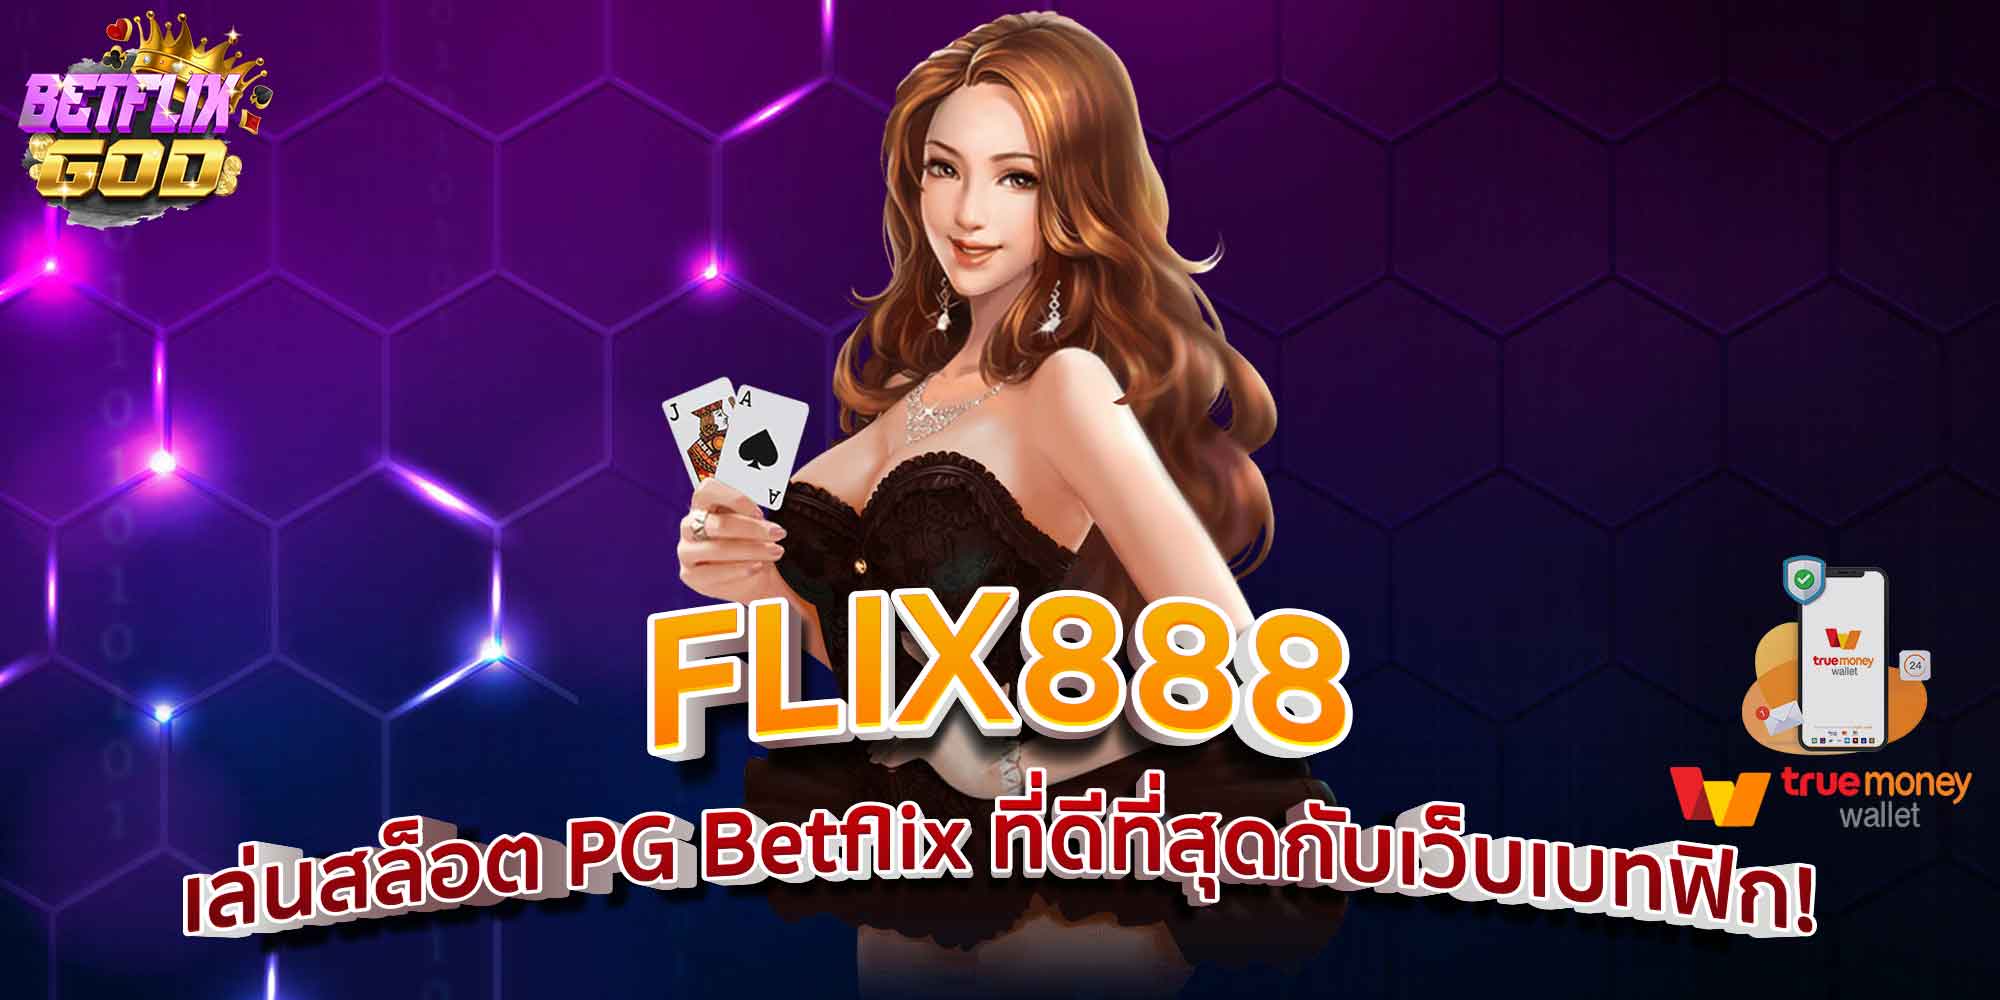 FLIX888 เล่นสล็อต PG Betflix ที่ดีที่สุดกับเว็บเบทฟิก!